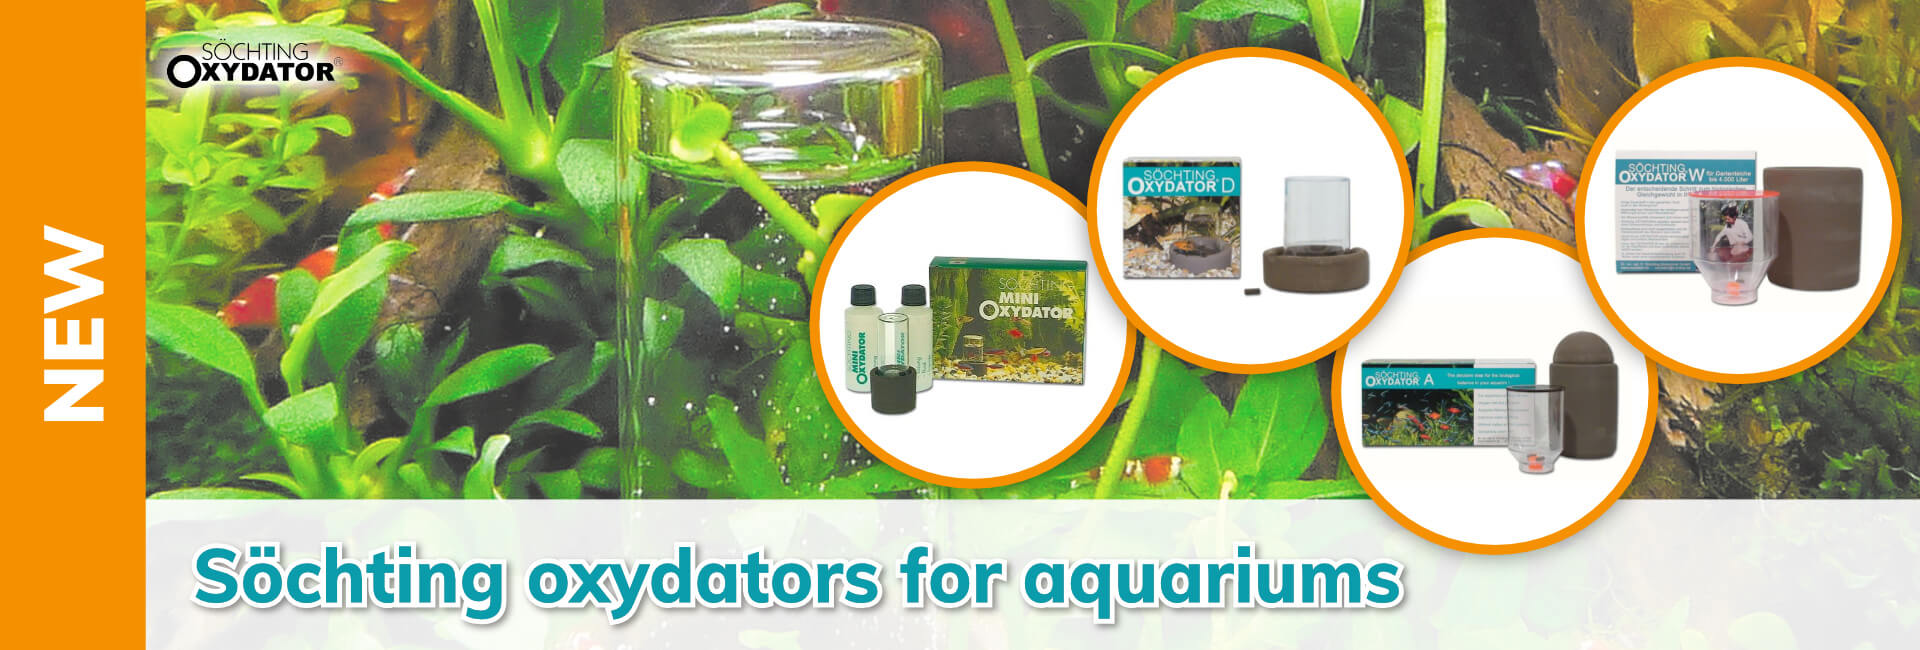 Söchting oxydators for aquariums